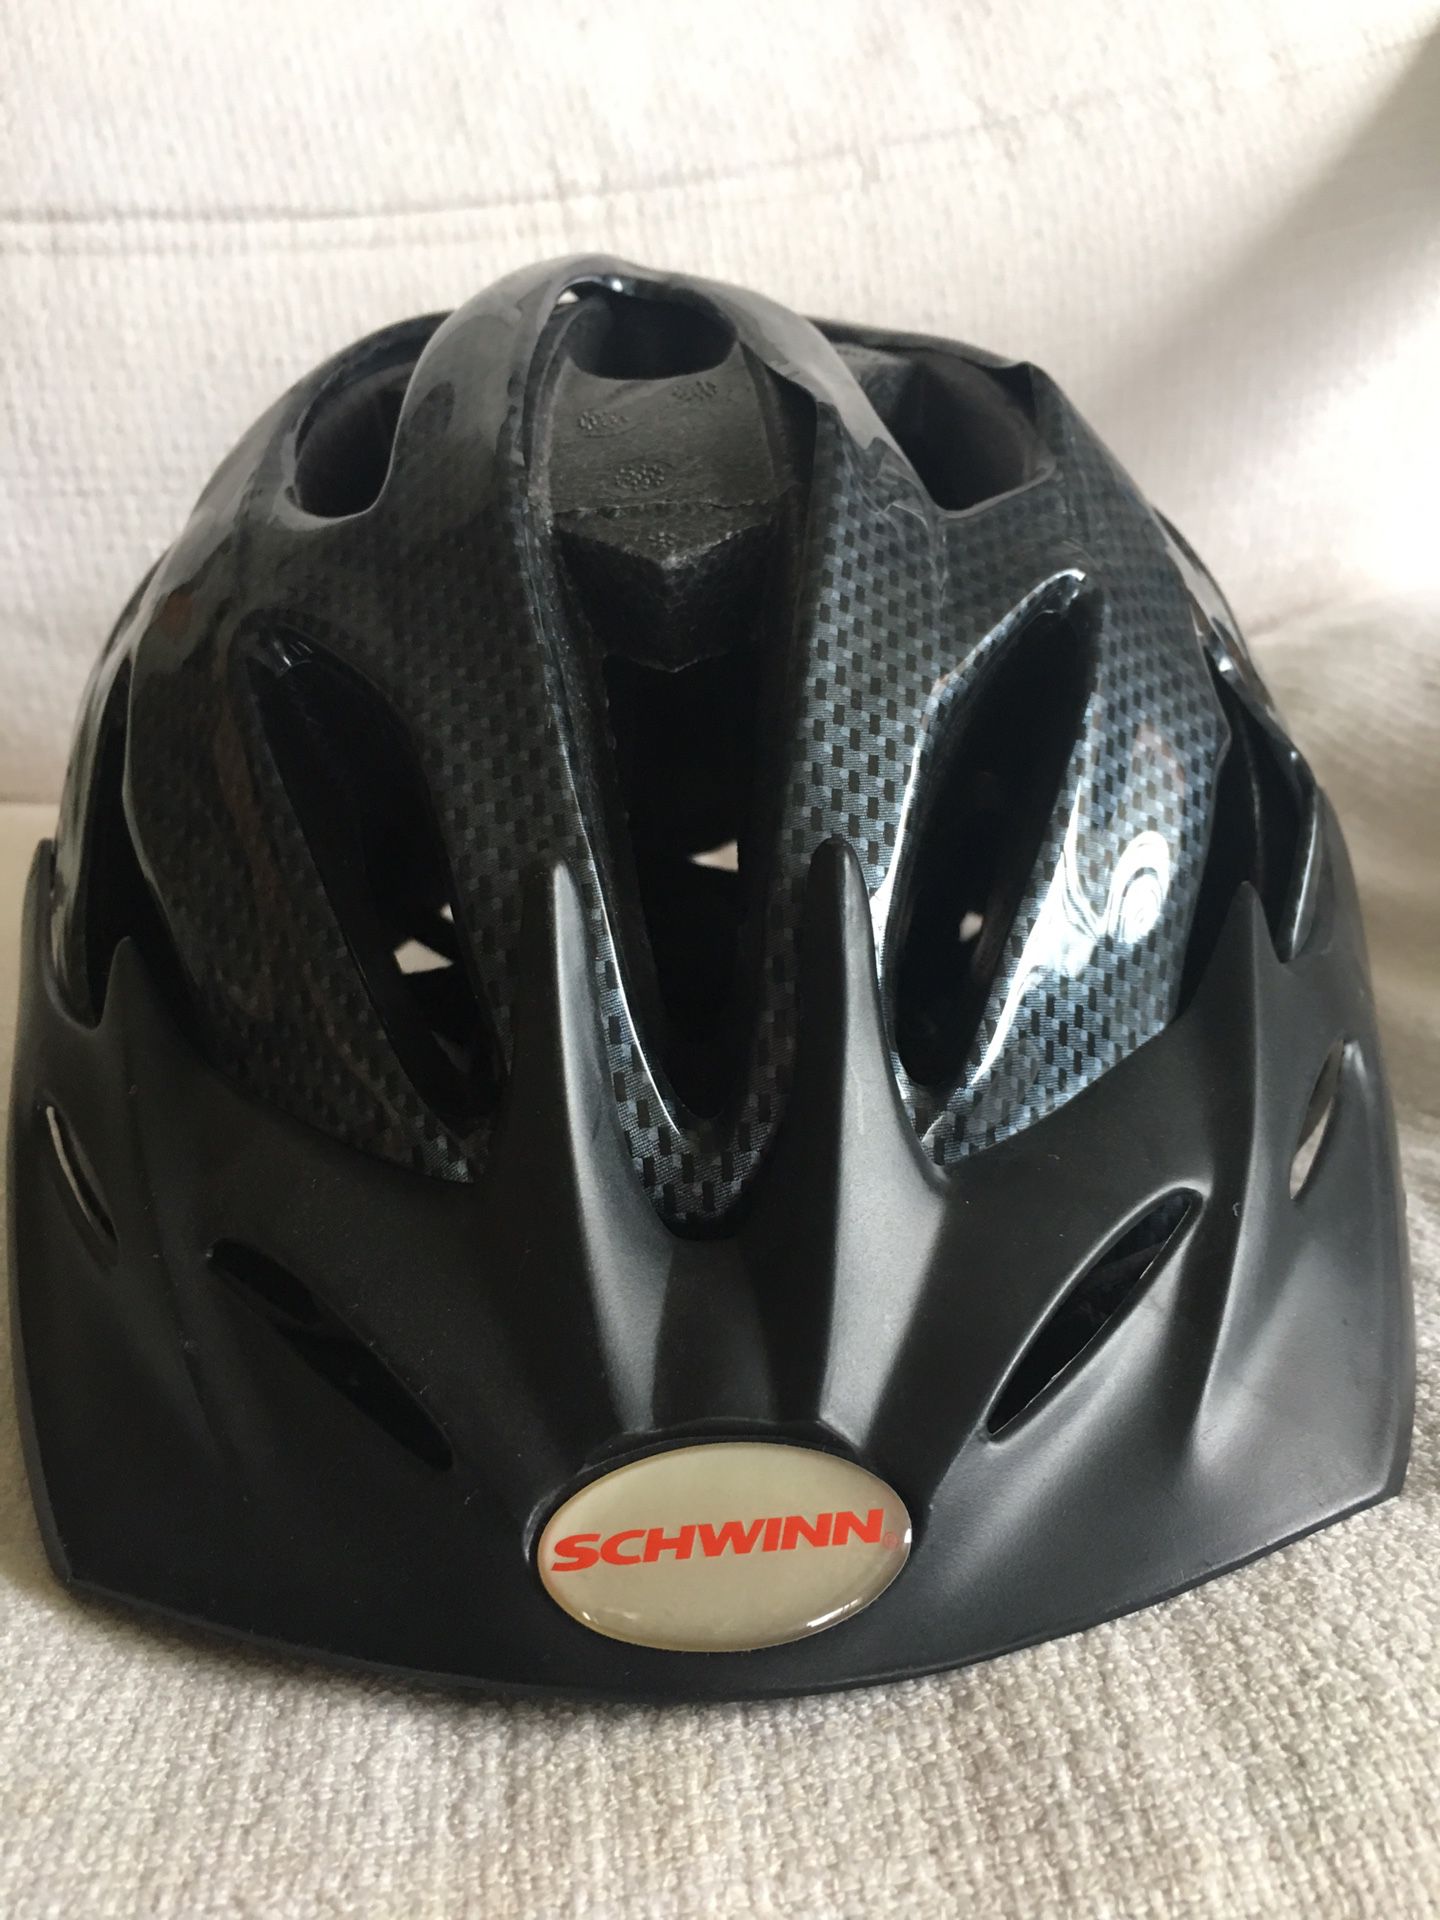 Schwinn bike helmet -barely used